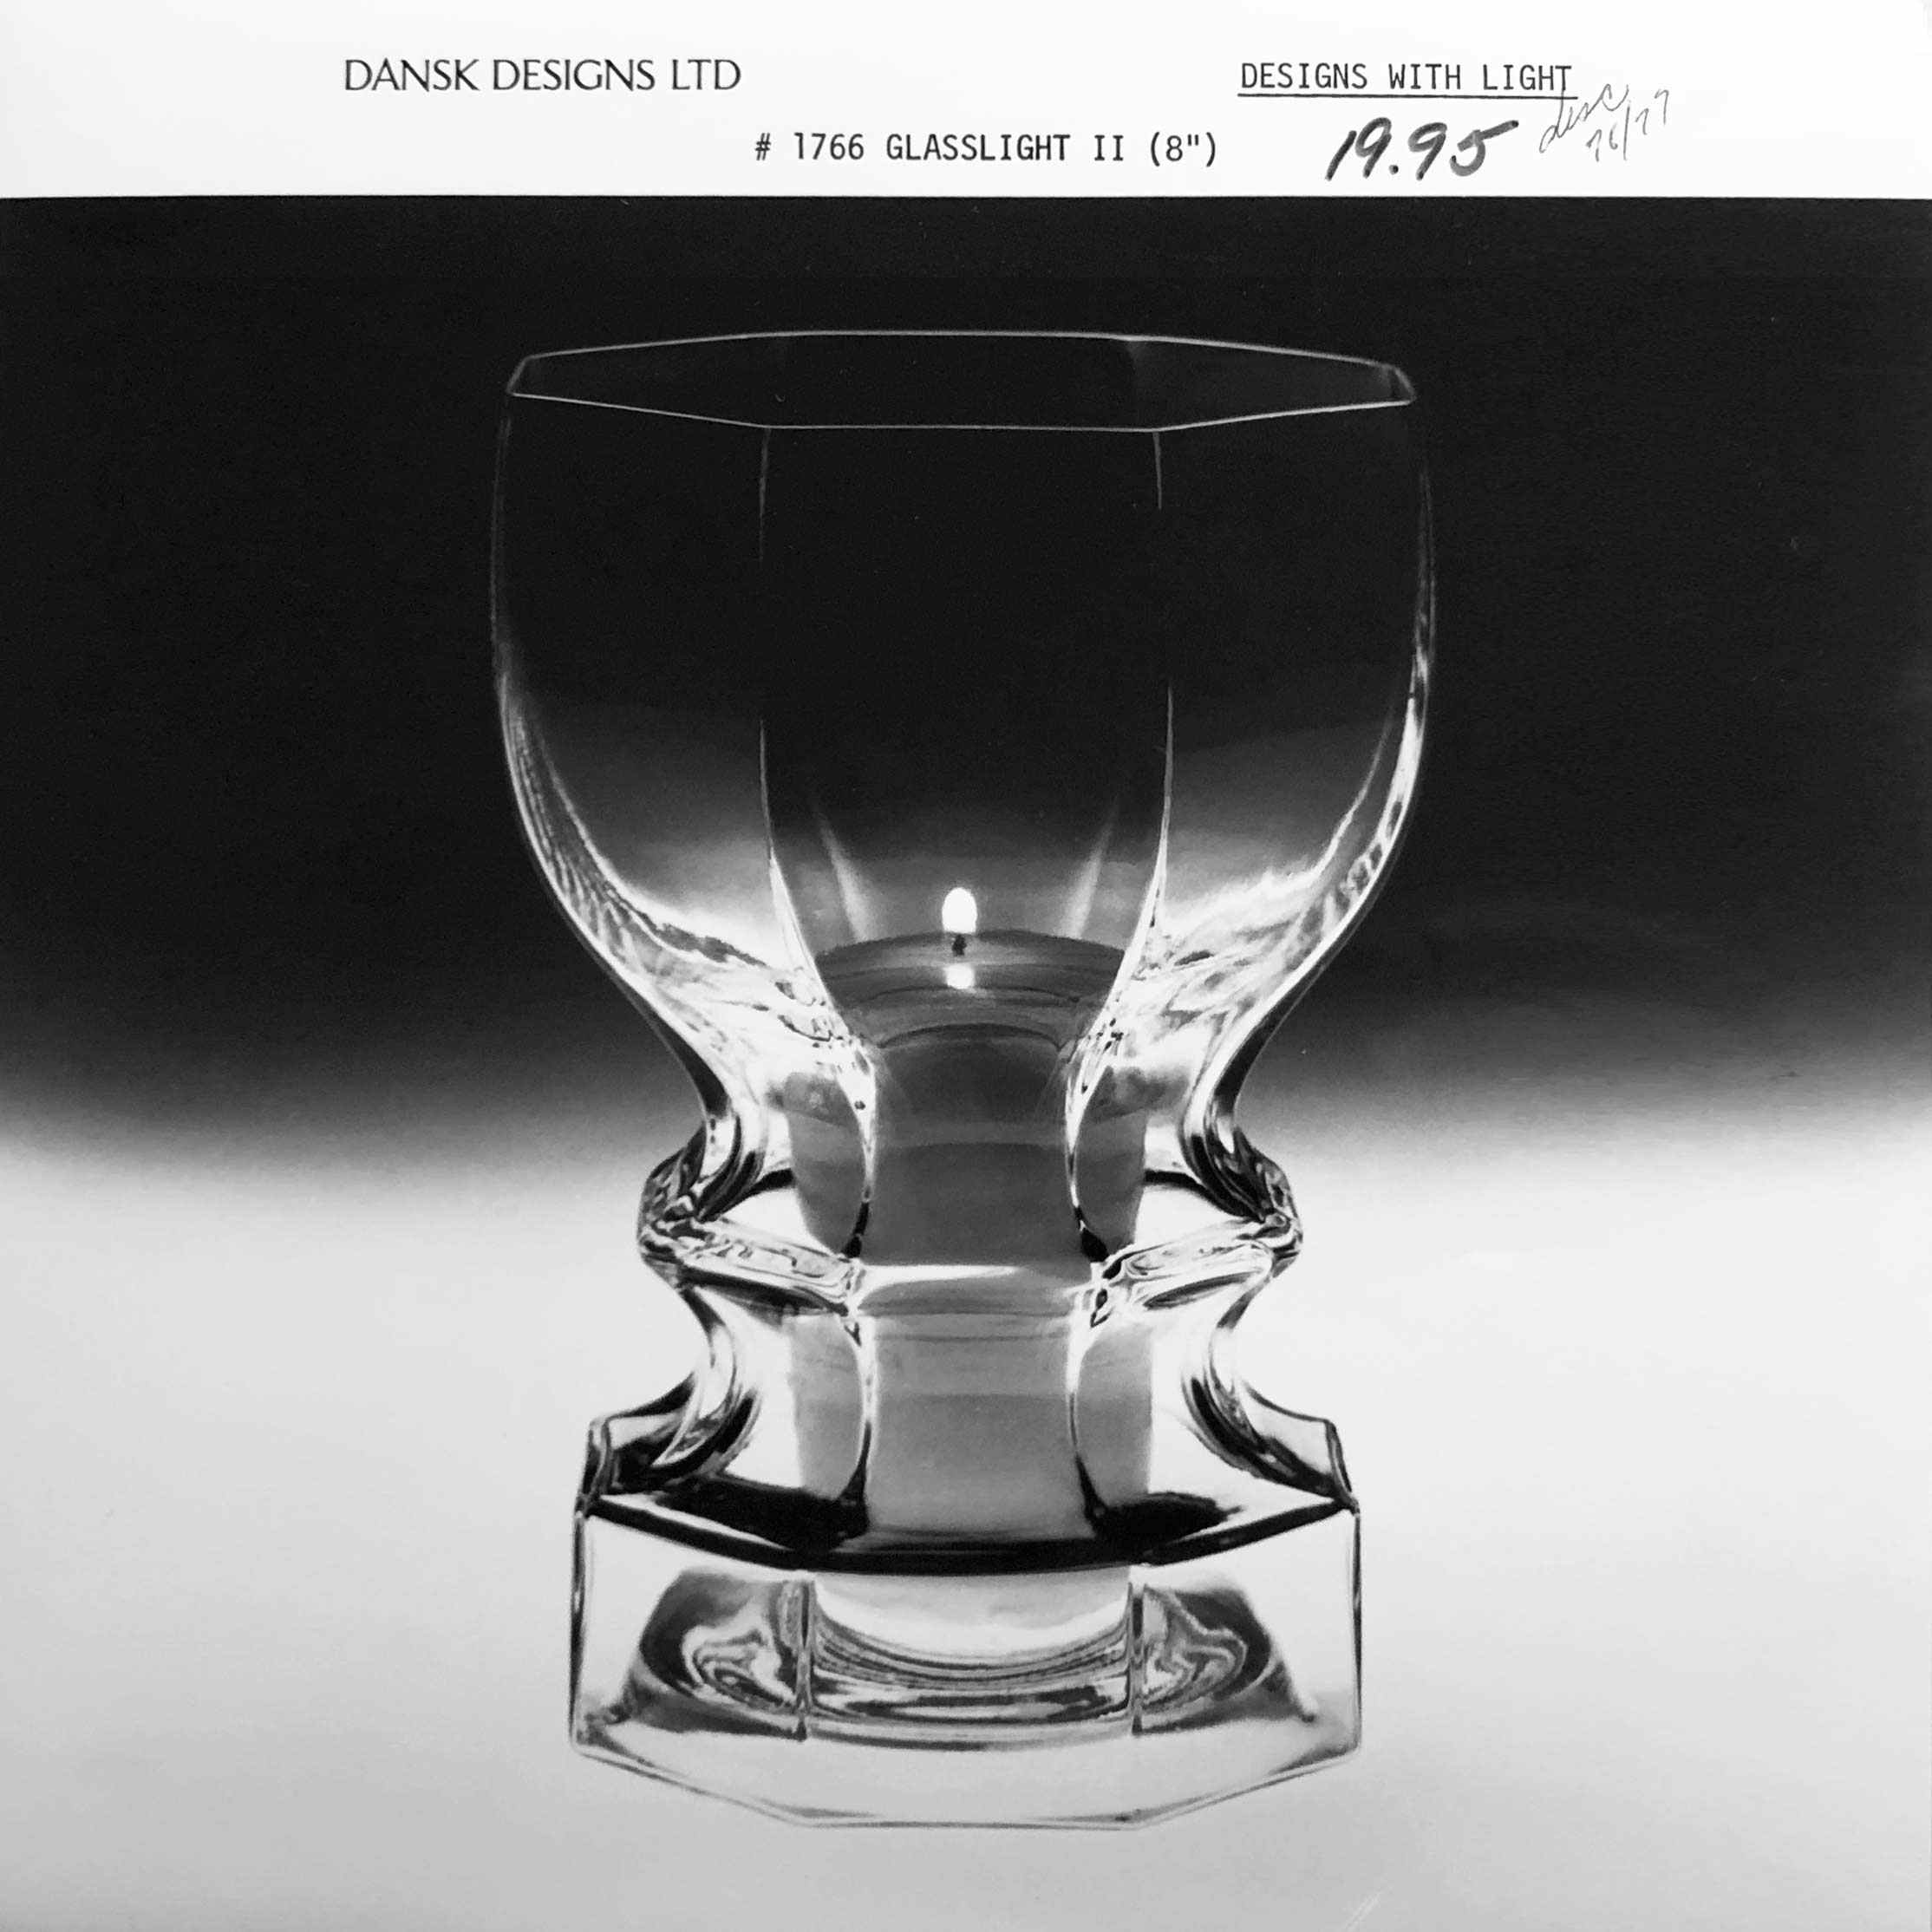 Design By Light, nr:1766, glasslight II